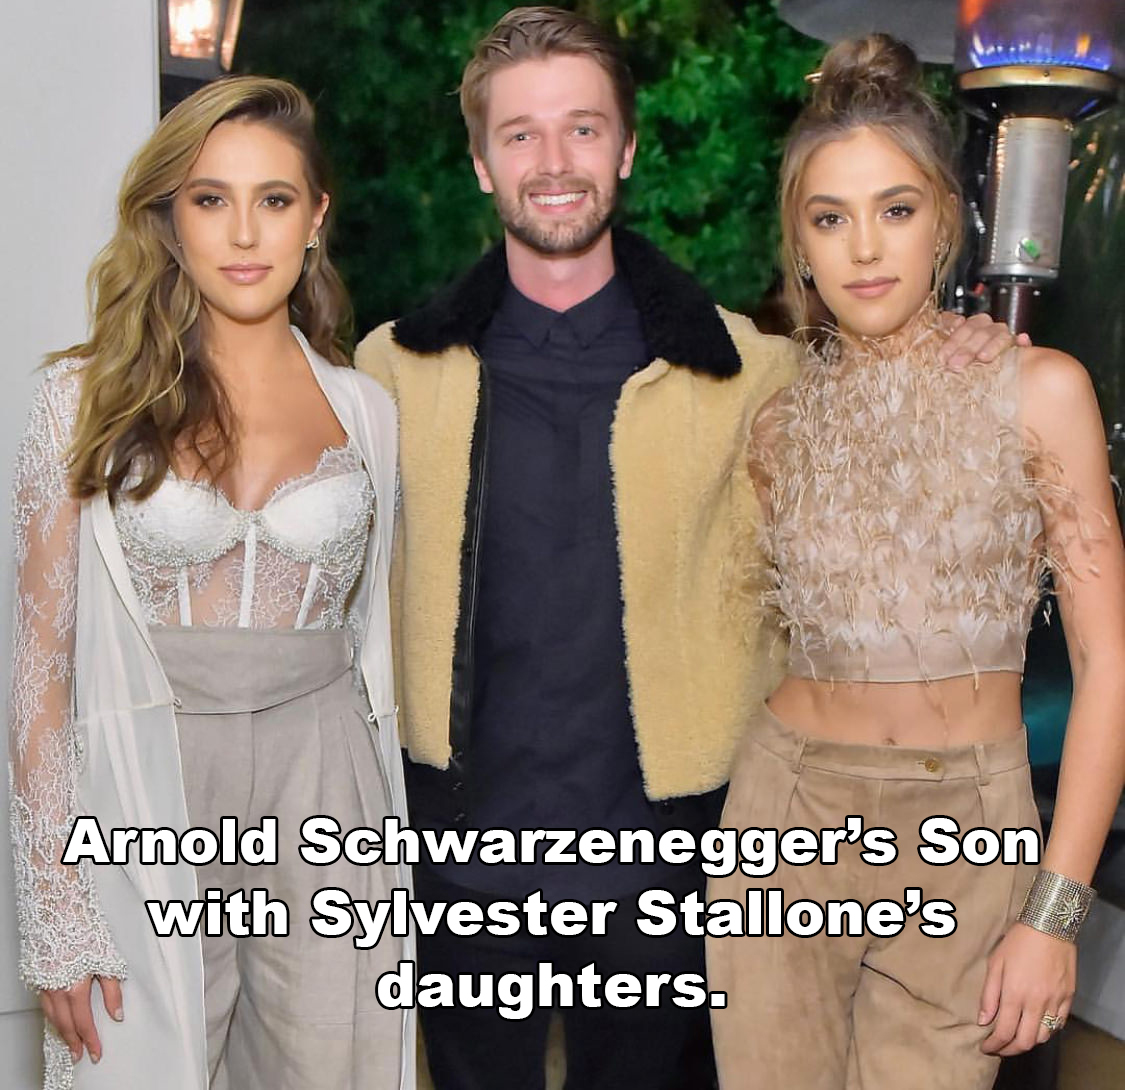 patrick schwarzenegger stallone - Arnold Schwarzenegger's Son with Sylvester Stallone's daughters.